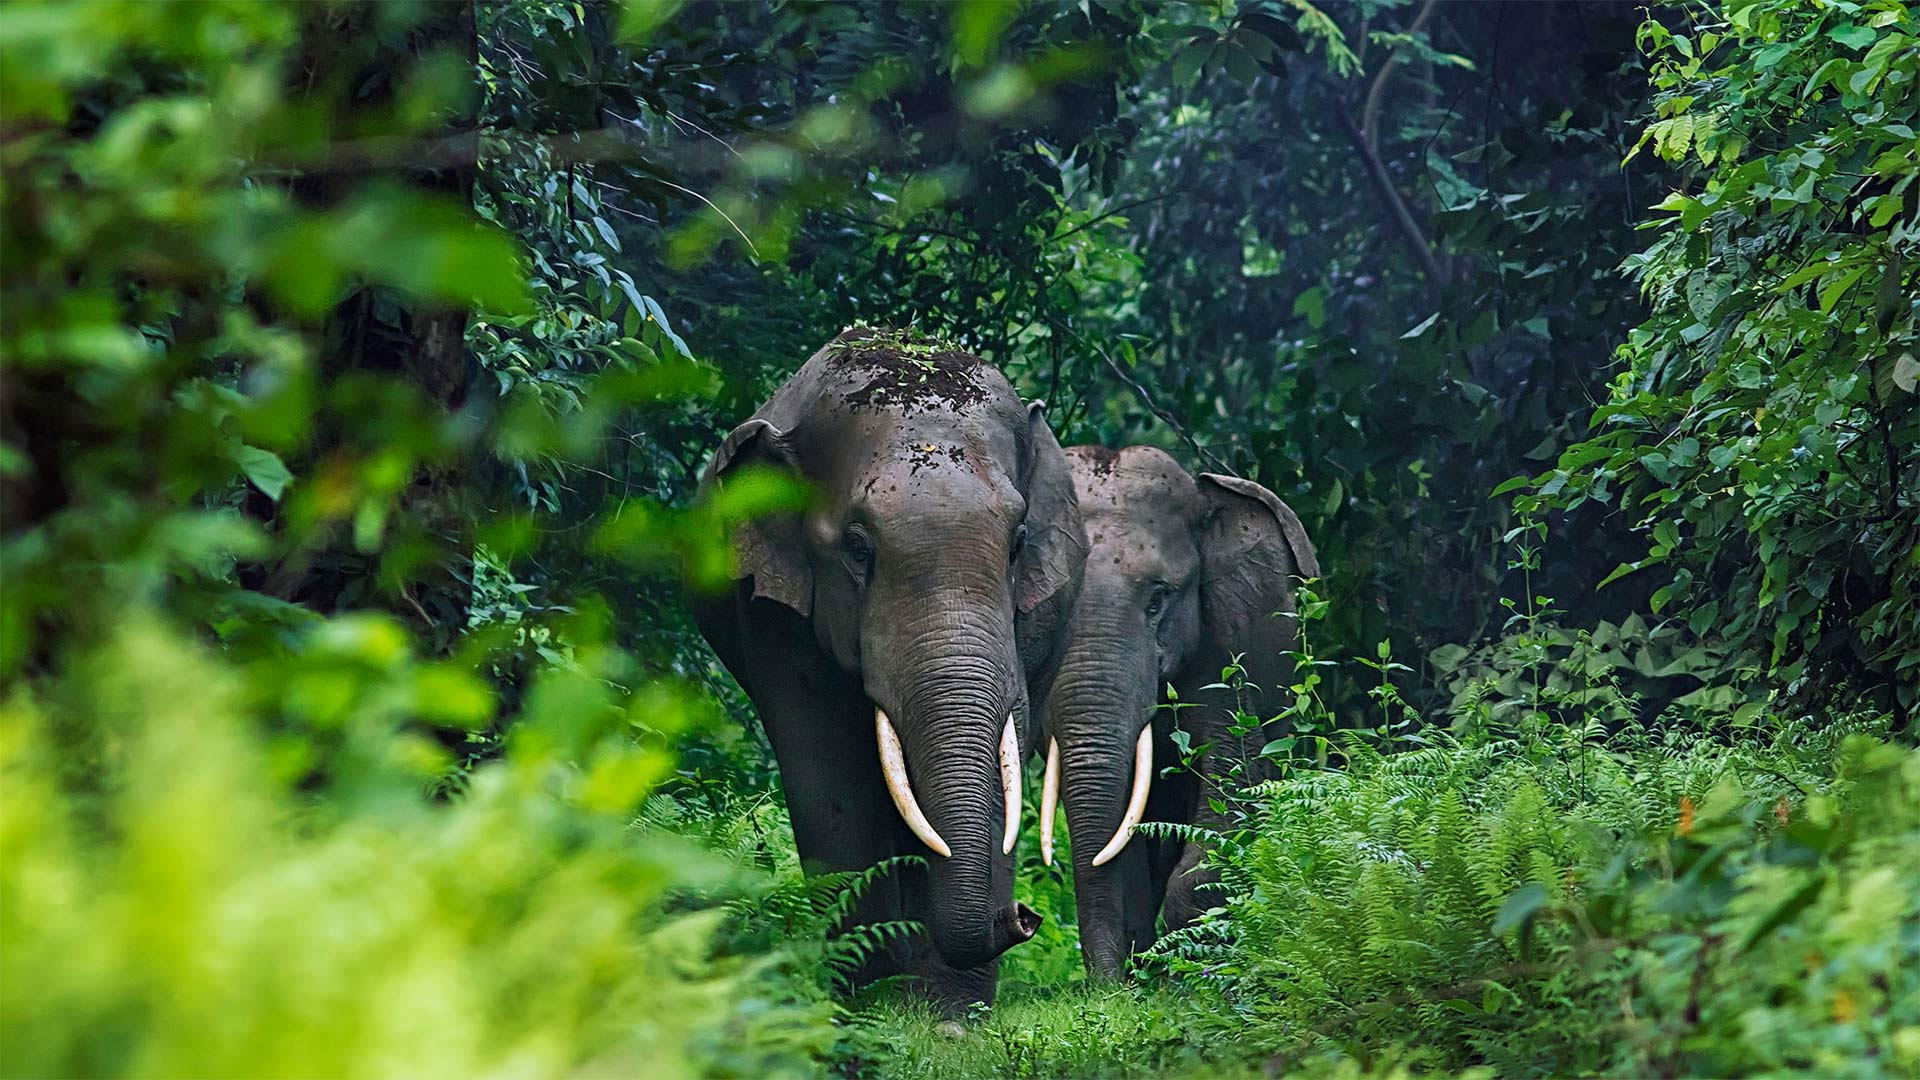 Asian elephants in West Bengal, India - Avijan Saha